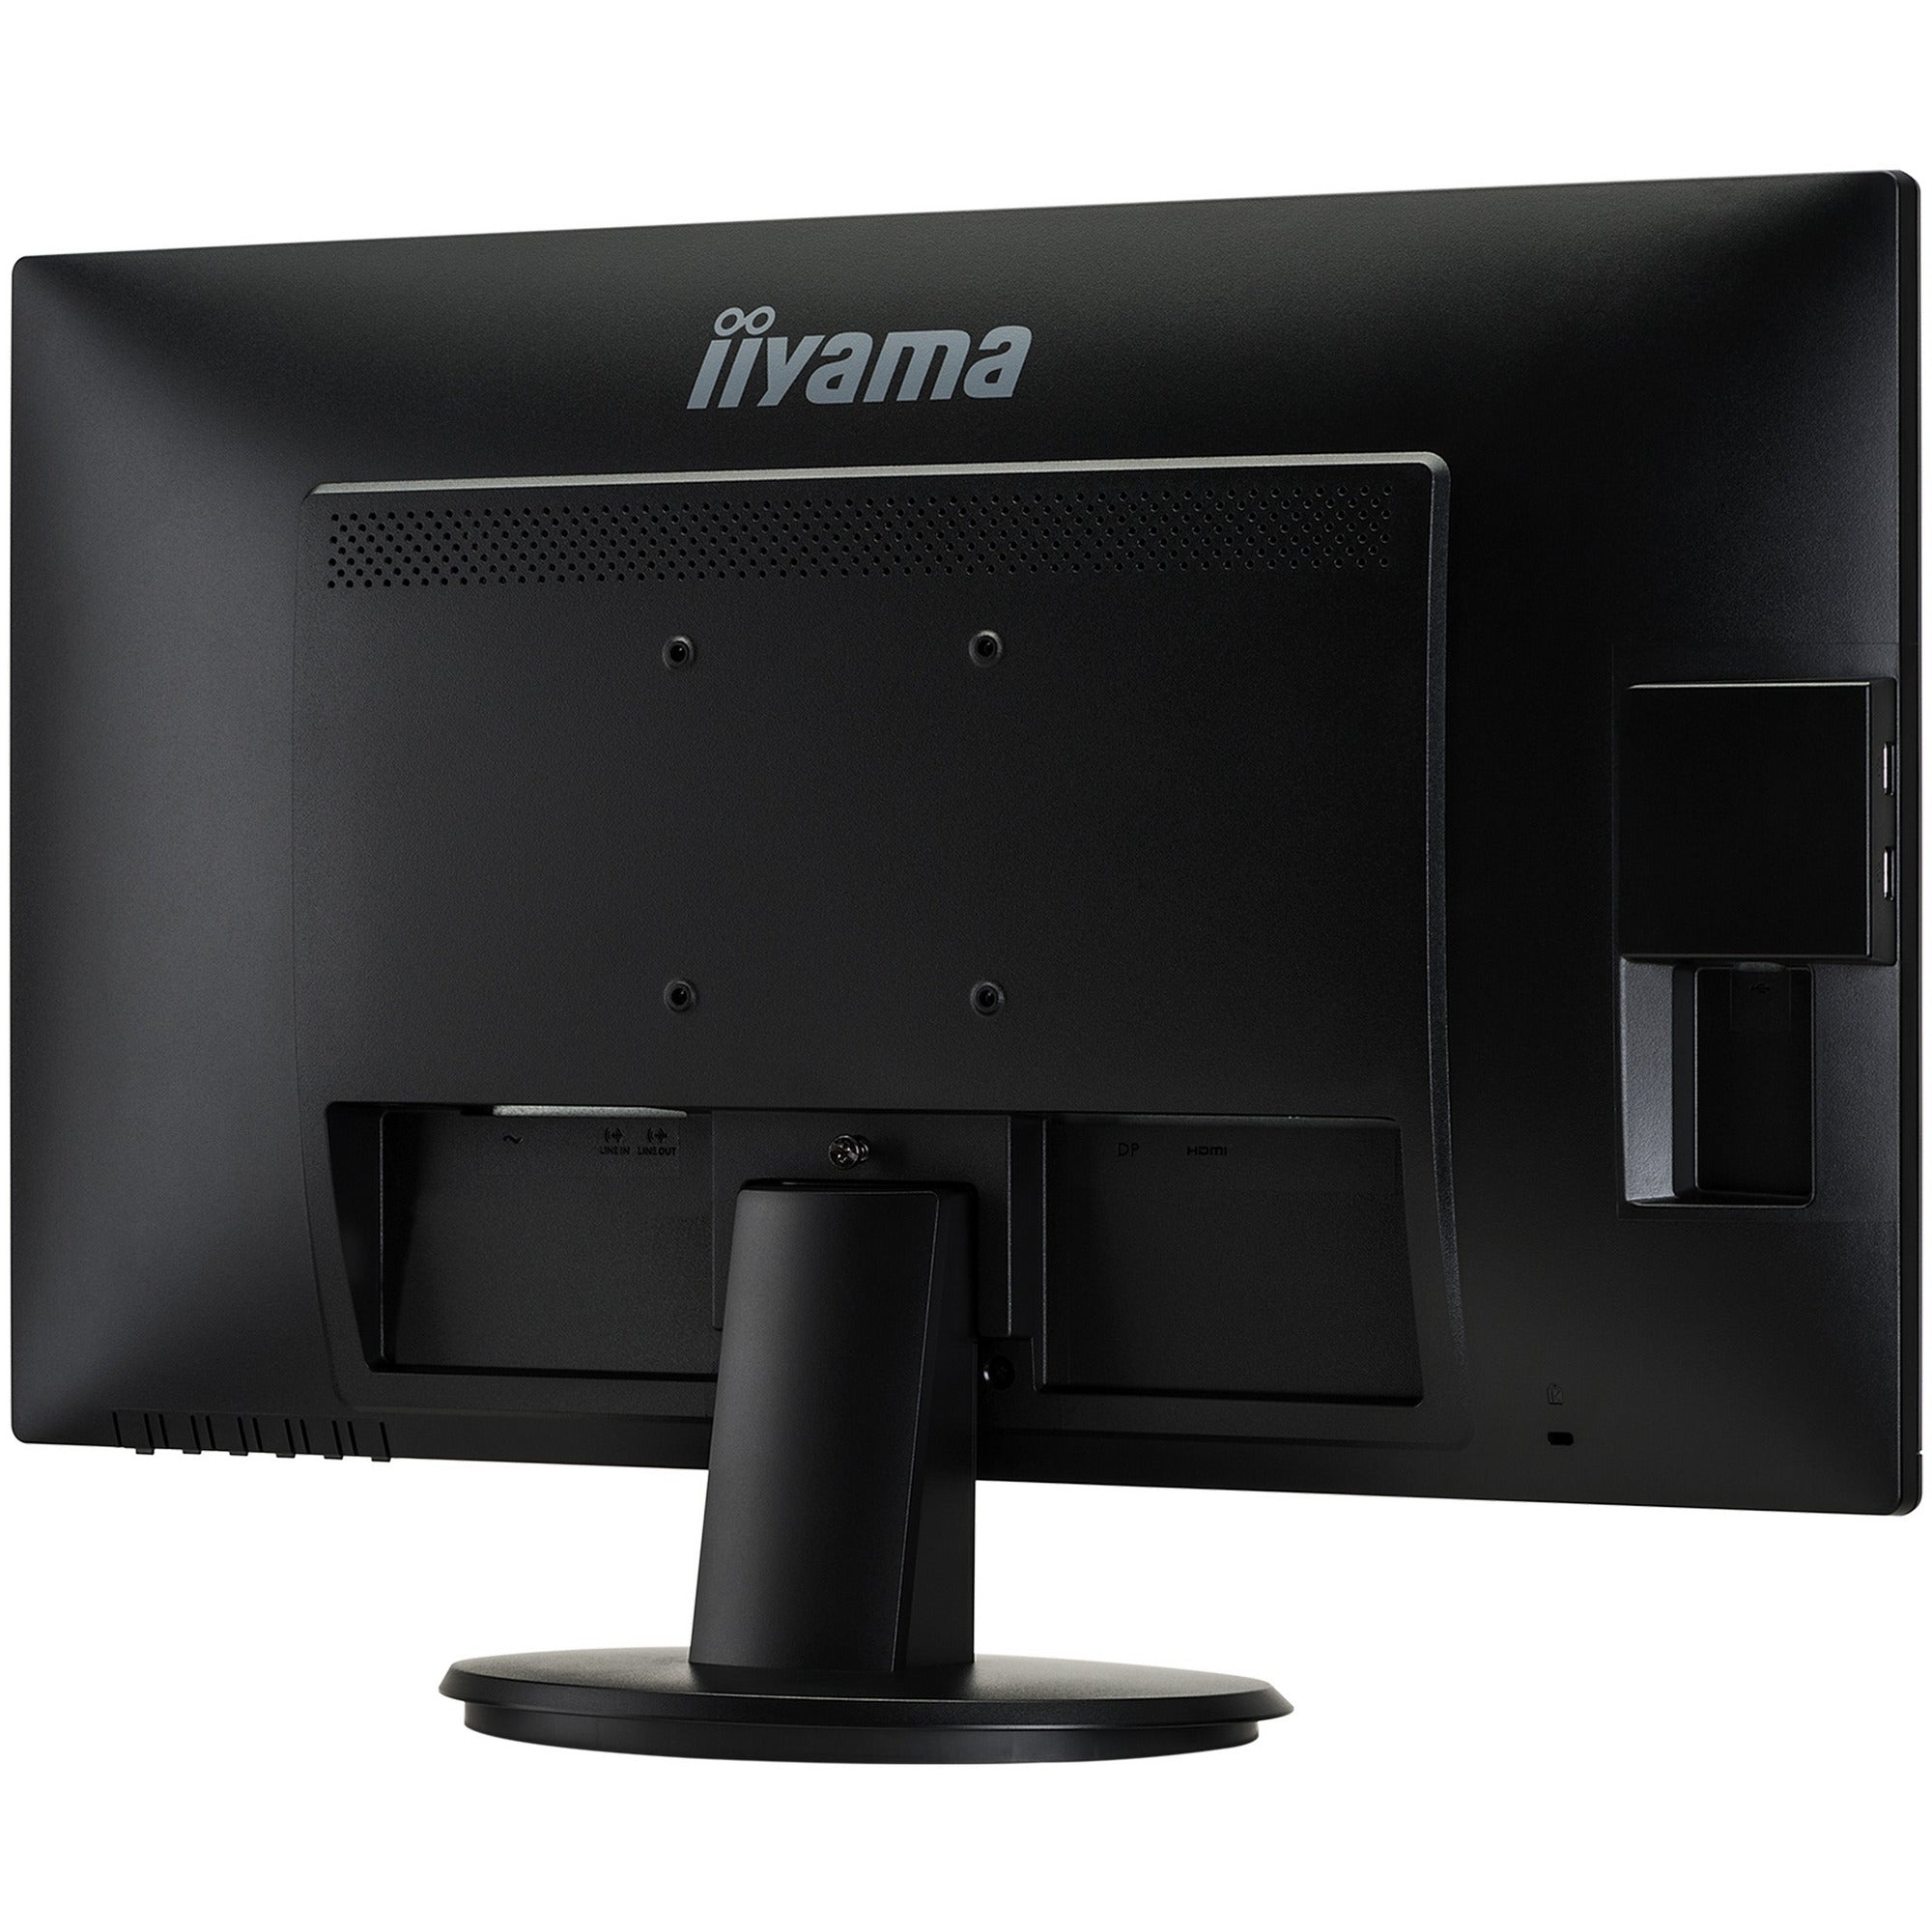 iiyama ProLite X2483HSU-B5 24 LED Display